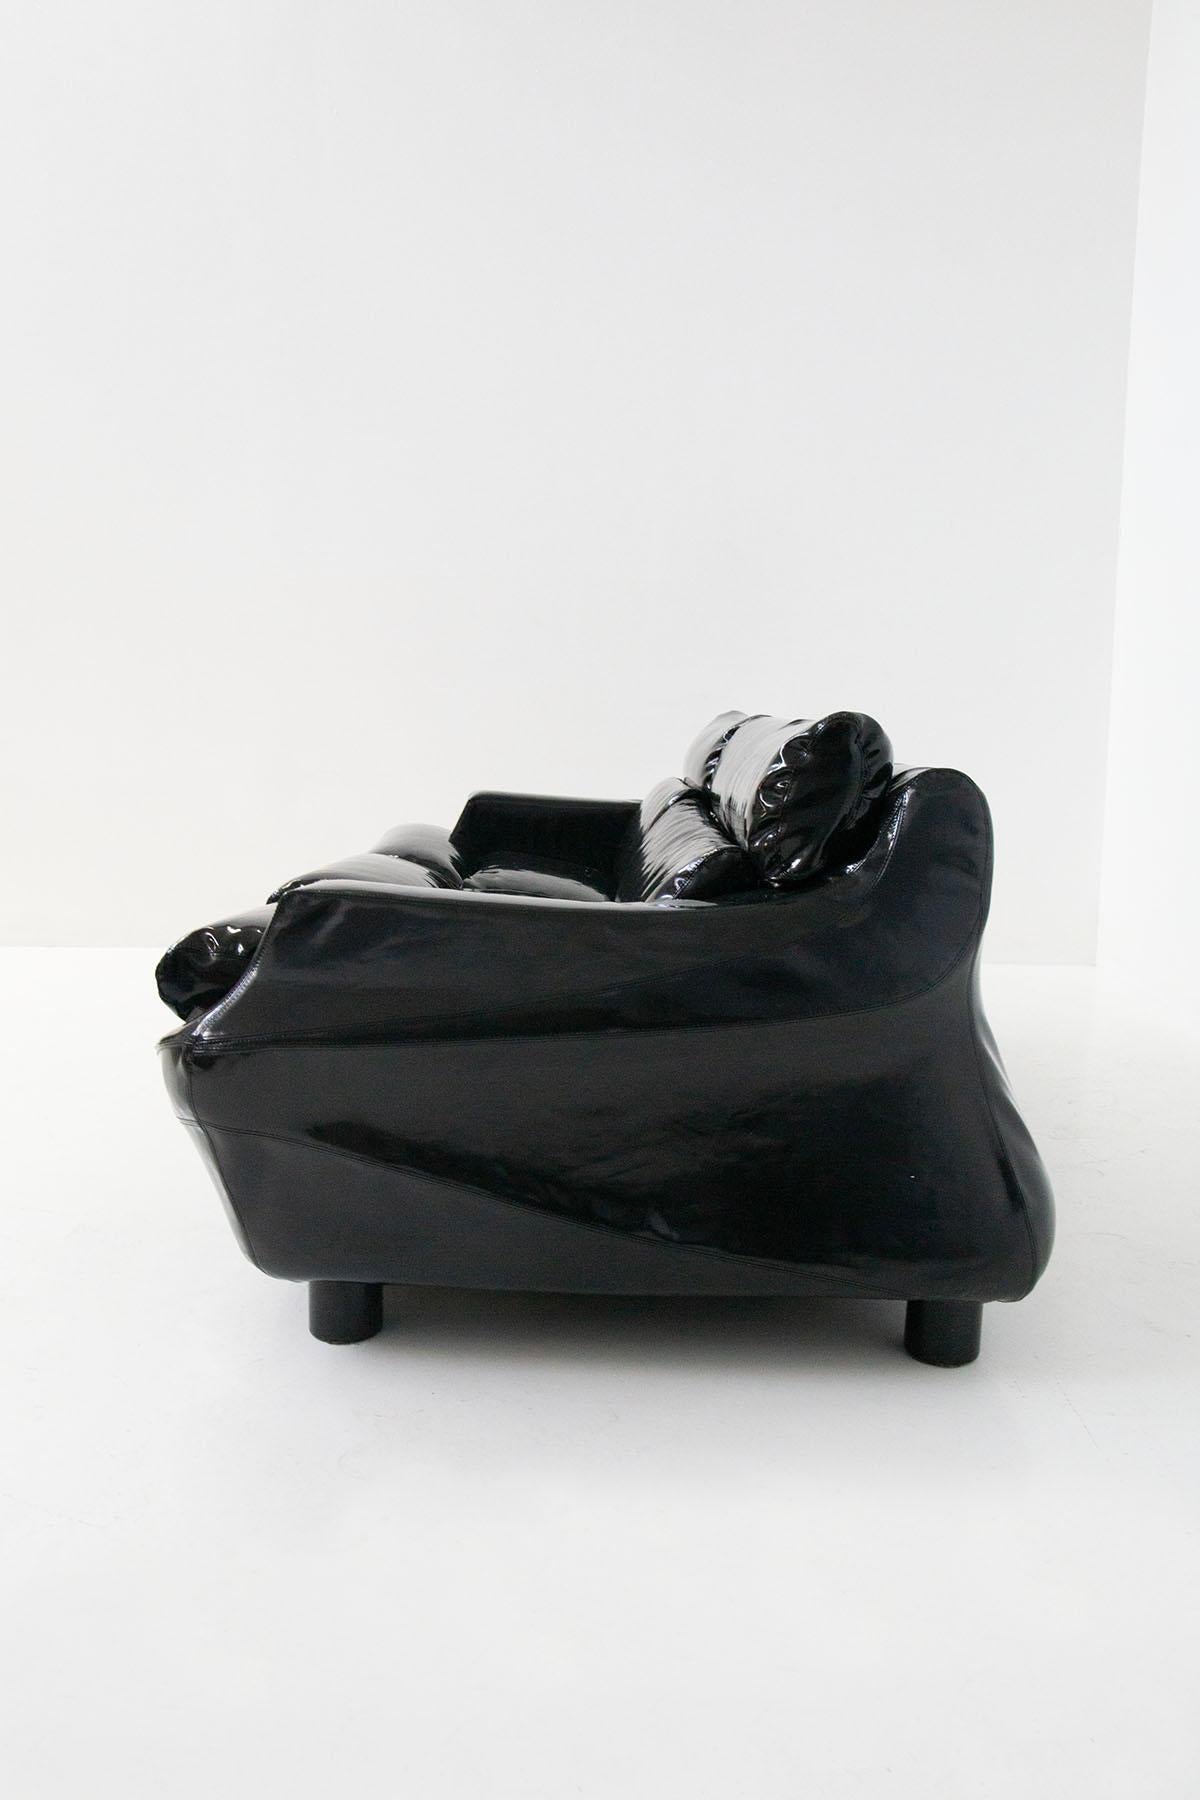 latex sofa